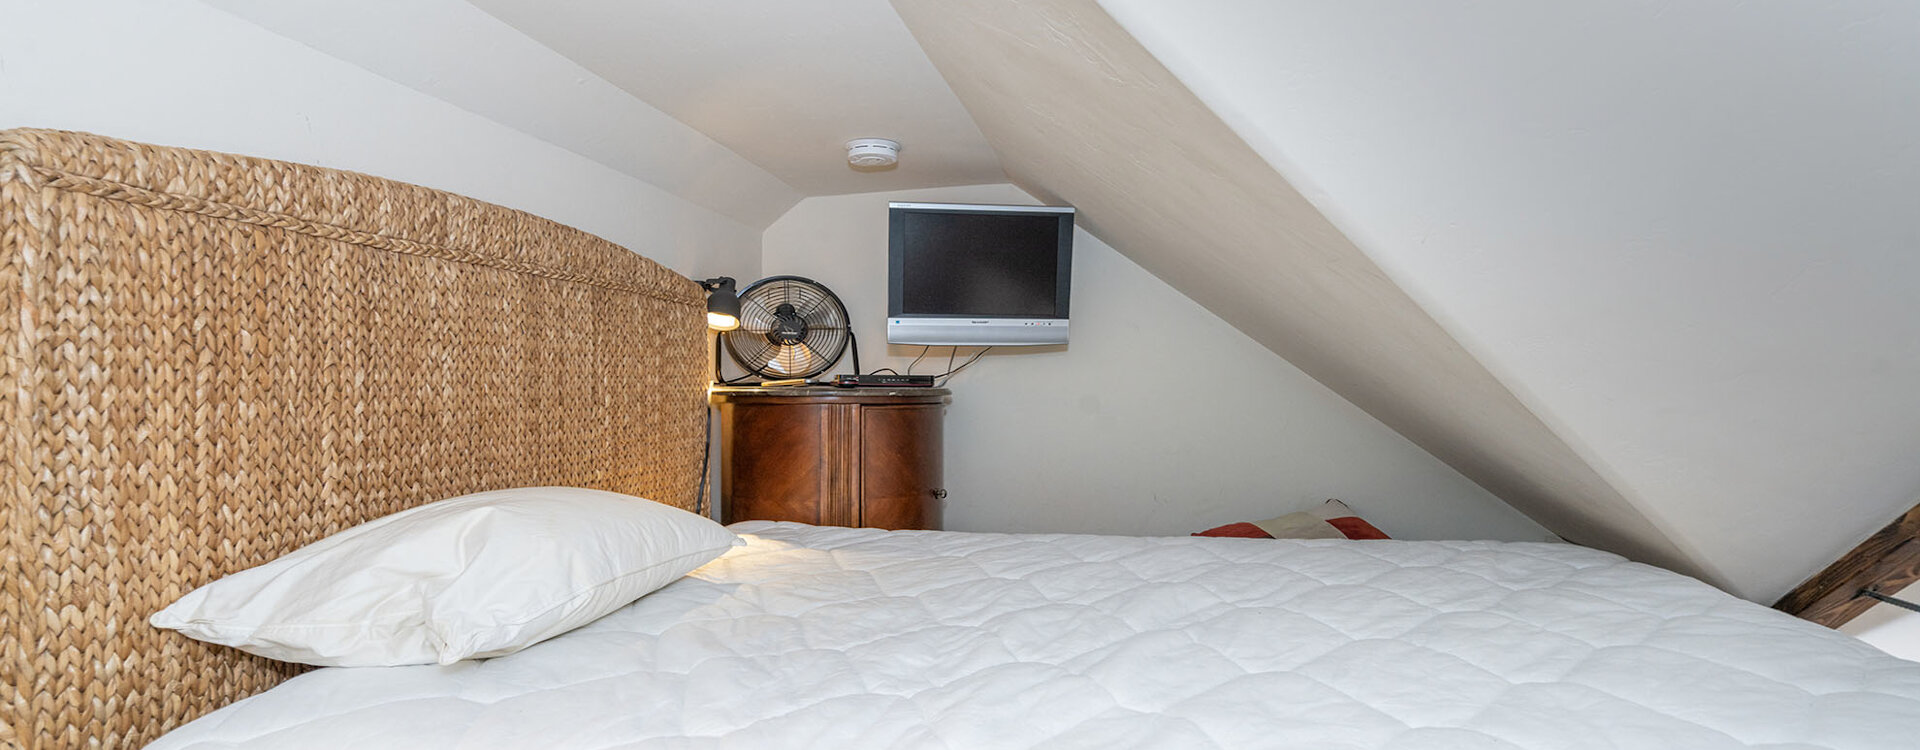 10-aspen-ridge-mountain-village-guest-bedroom